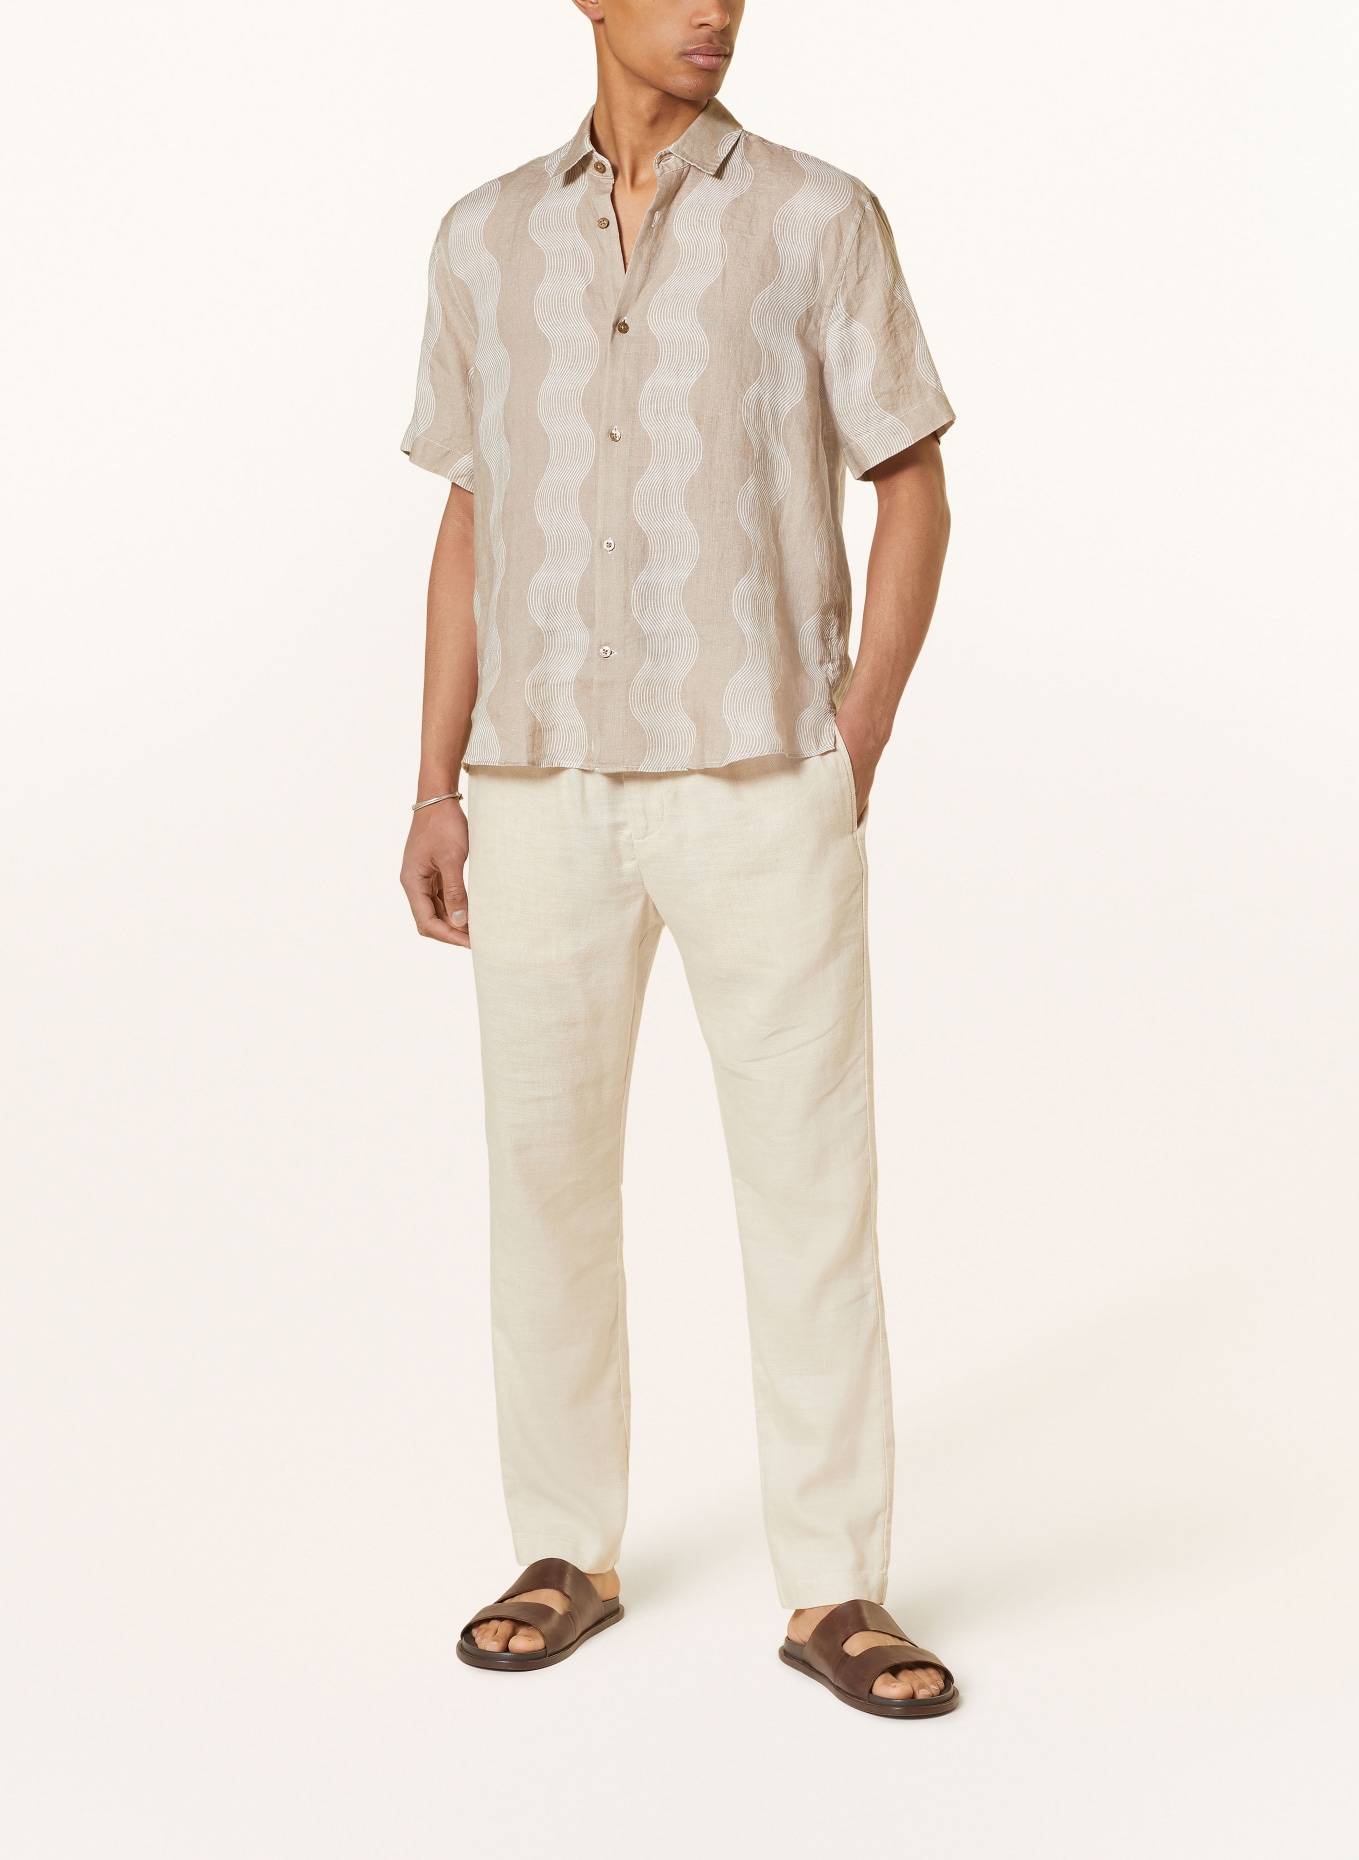 FRESCOBOL CARIOCA Kurzarm-Hemd CASTRO CABANA Comfort Fit aus Leinen, Farbe: 759 Truffle (Bild 2)